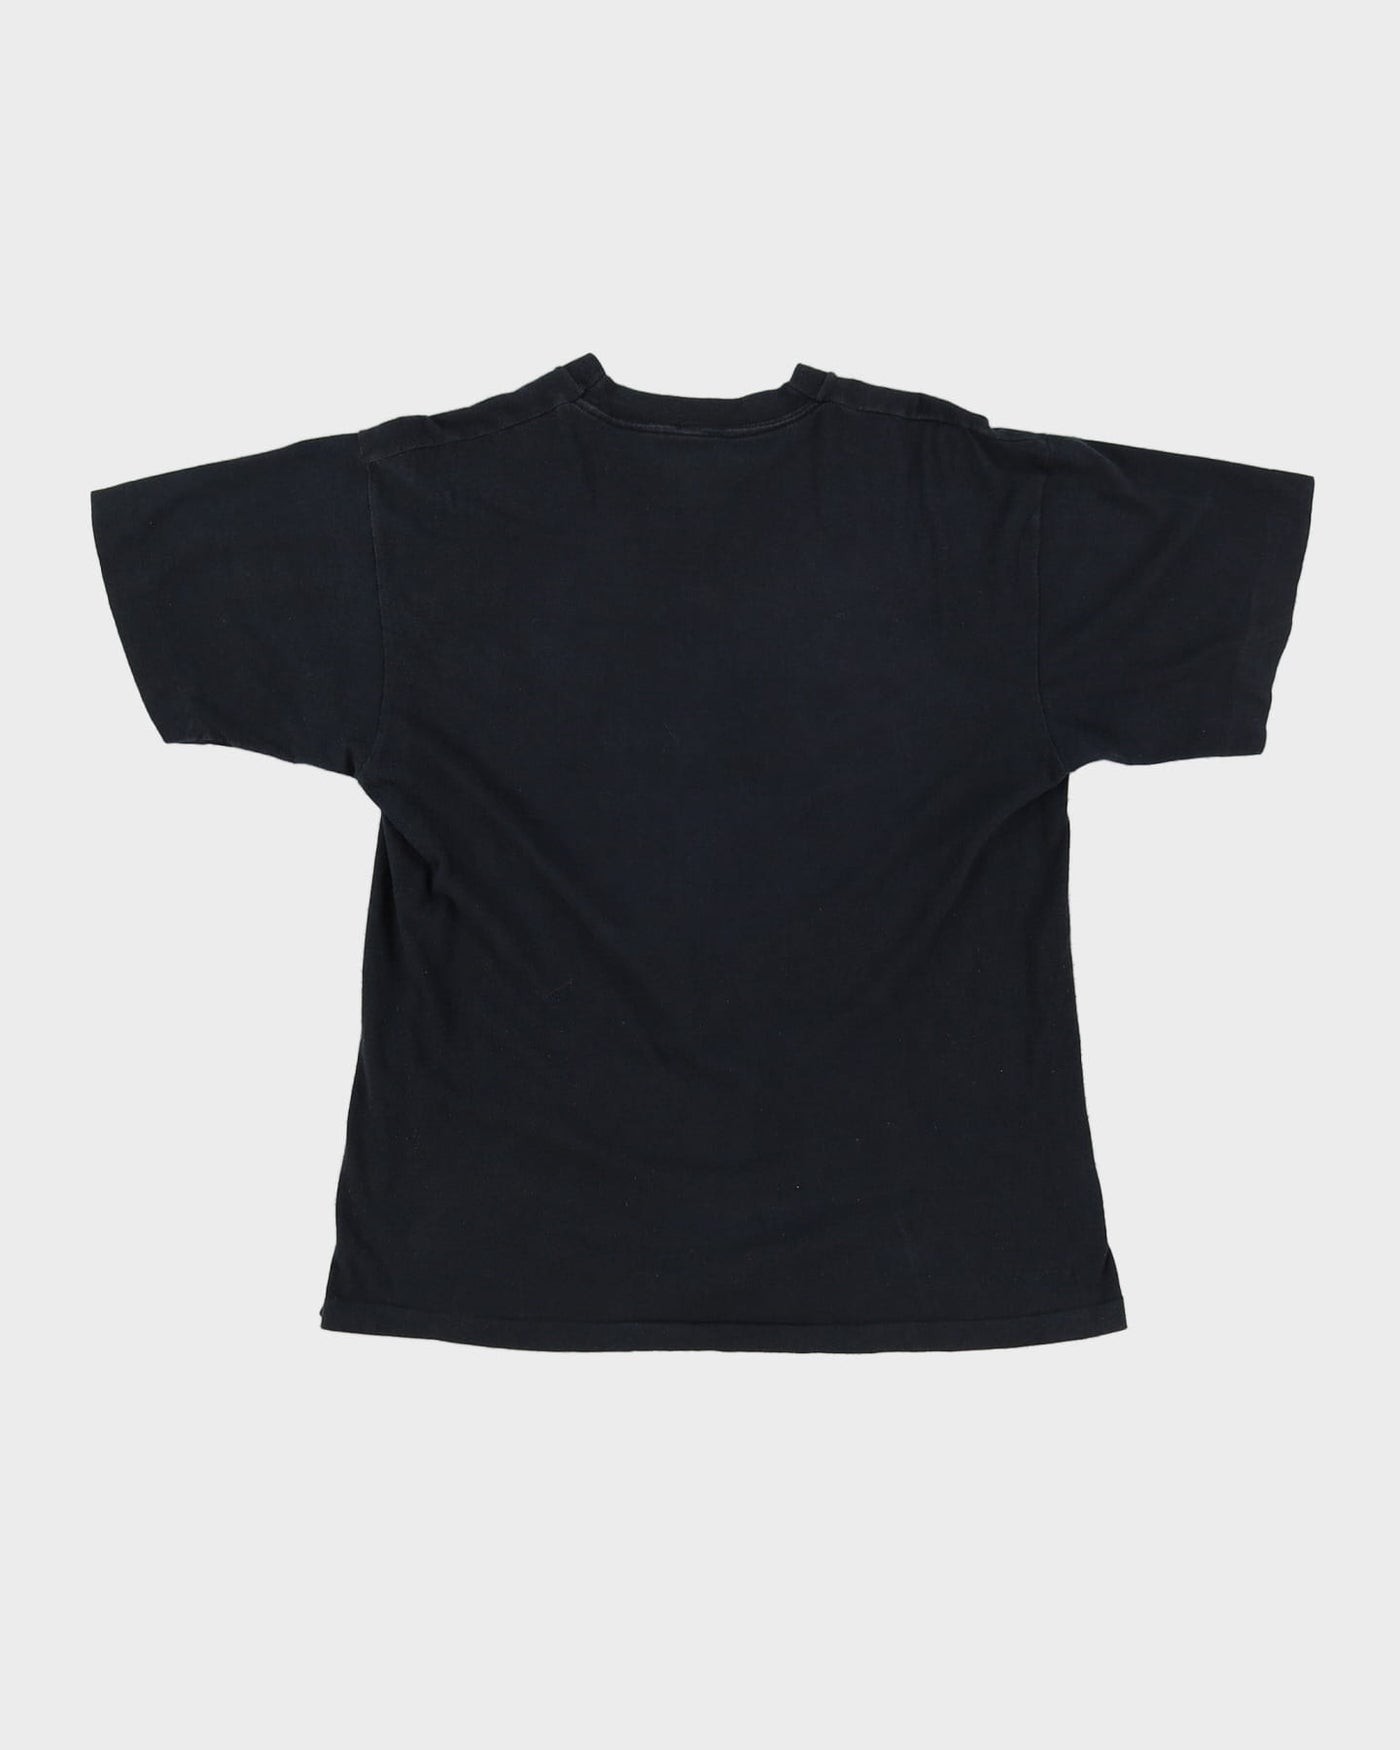 80s Tred Hard Surfing Black Single Stitch Graphic T-Shirt - S